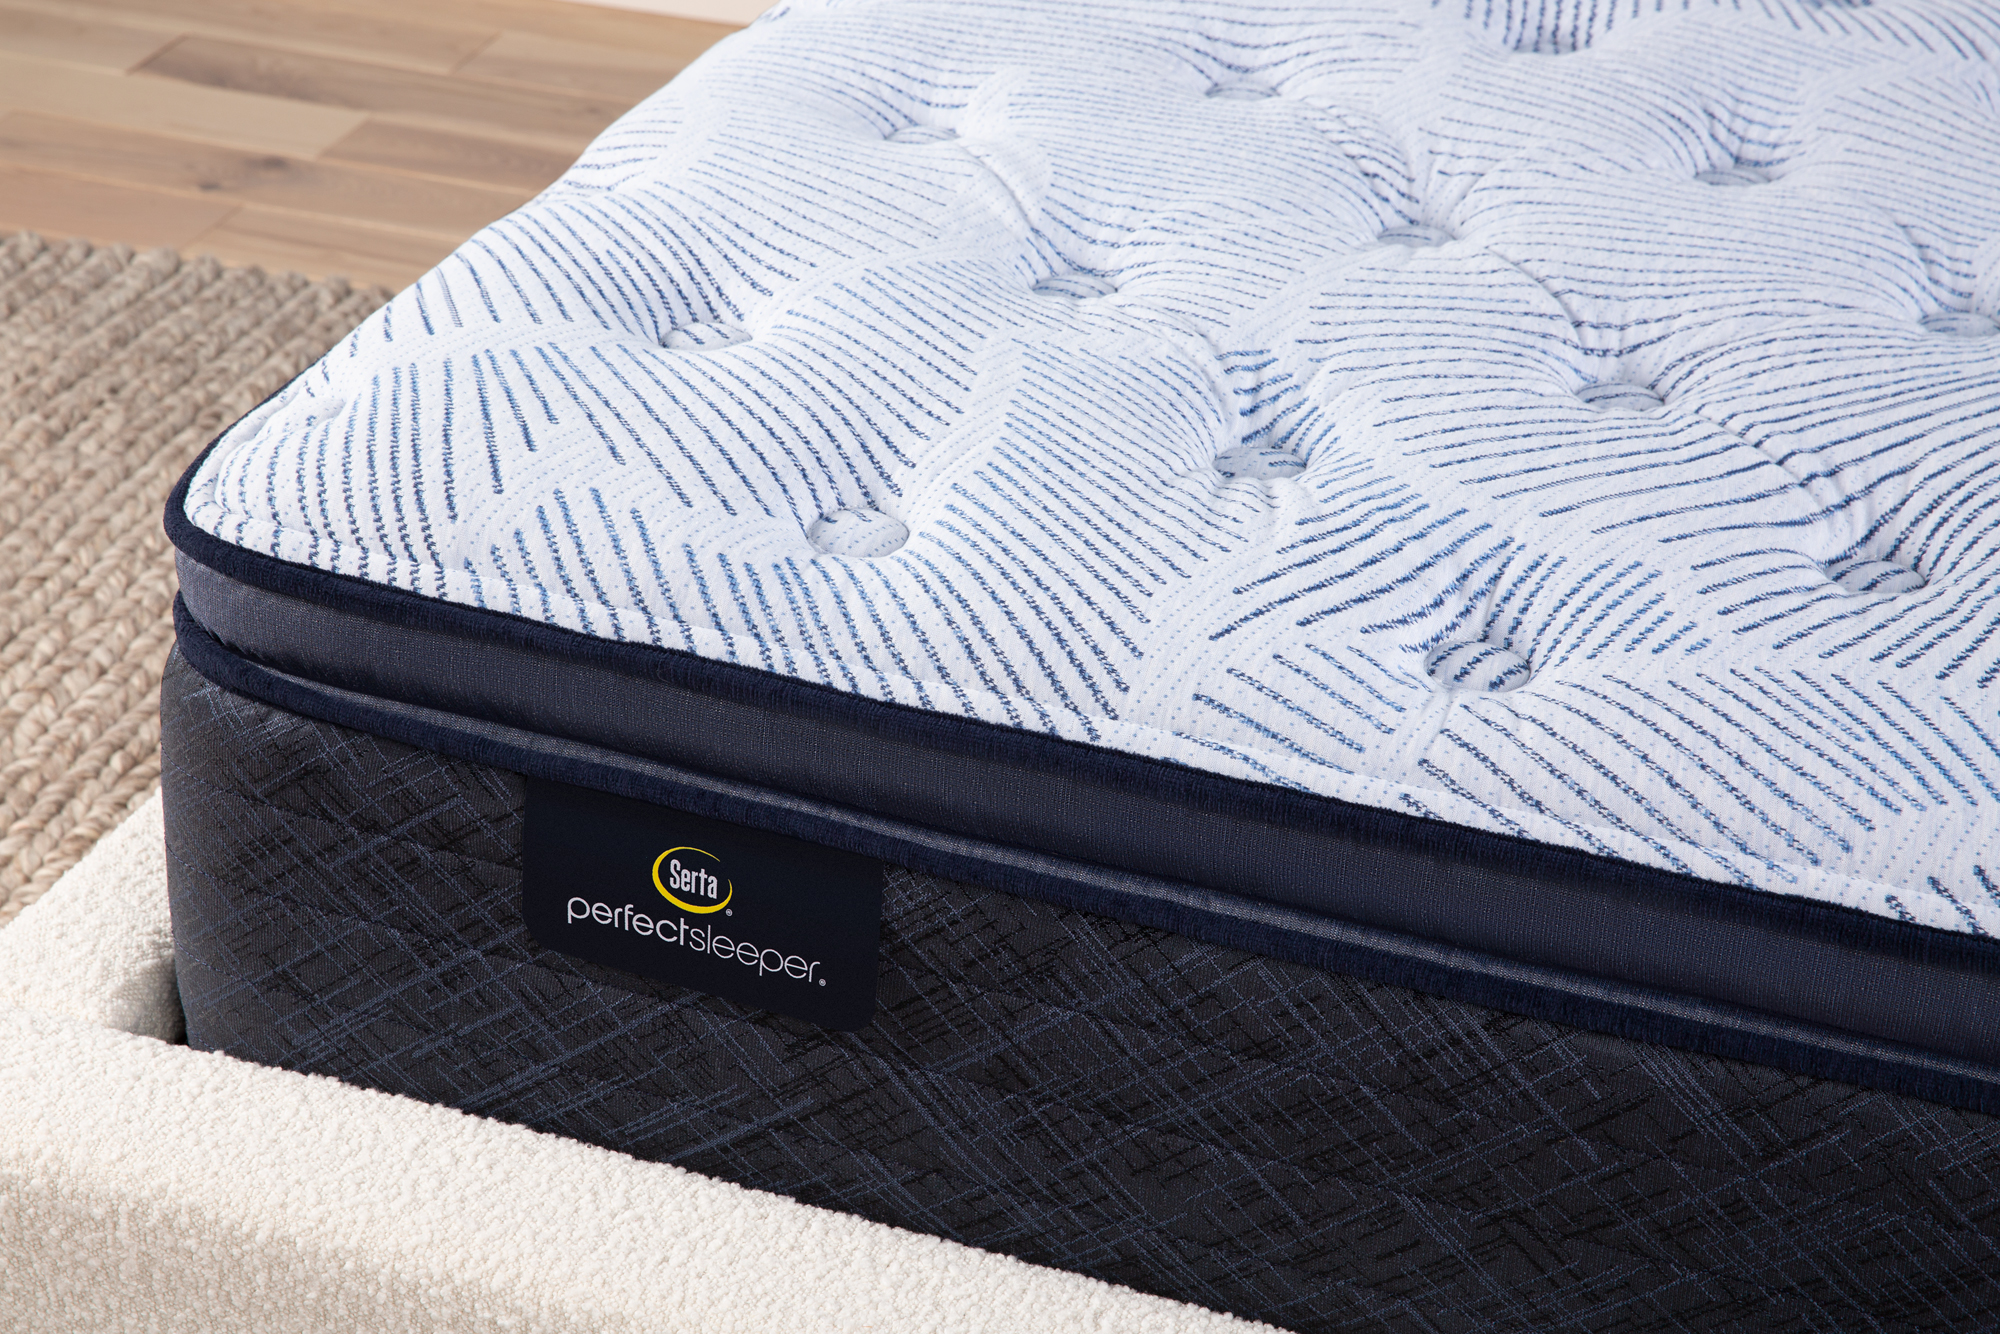 Photo of the Serta Perfect Sleeper Blue Lagoon Nights Plush Pillowtop mattress.